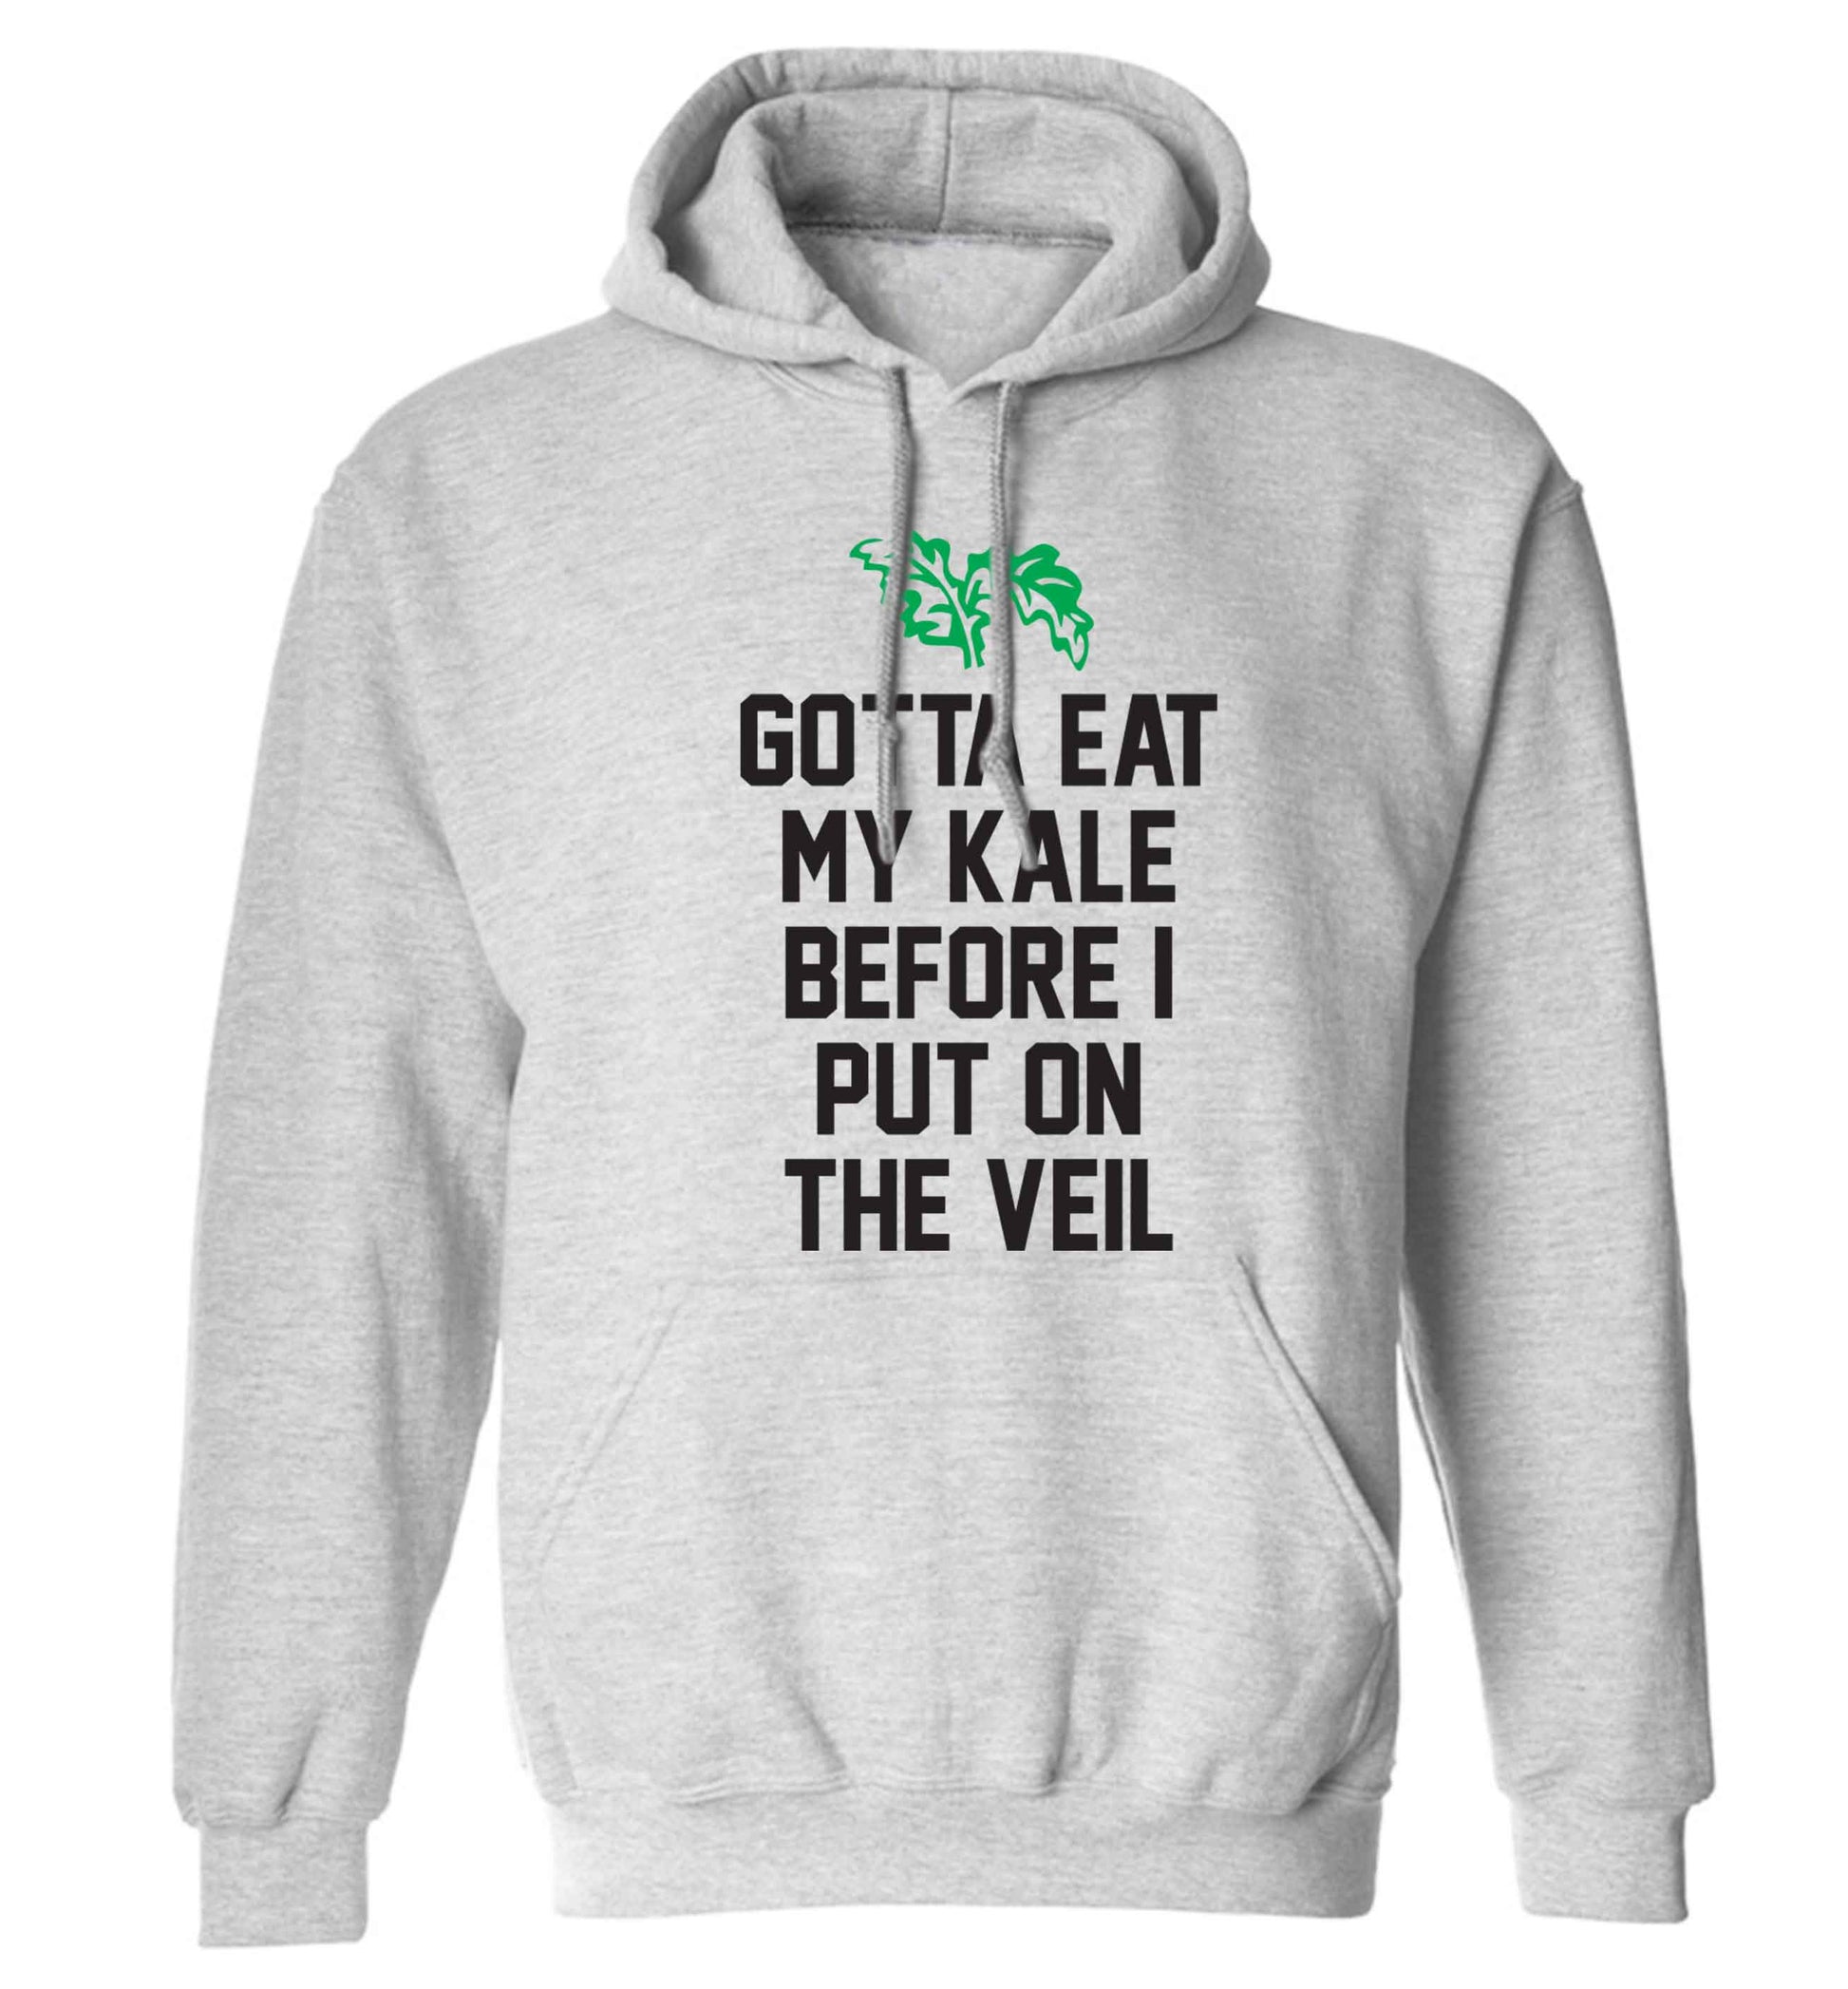 Gotta eat my kale before I put on the veil adults unisex grey hoodie 2XL